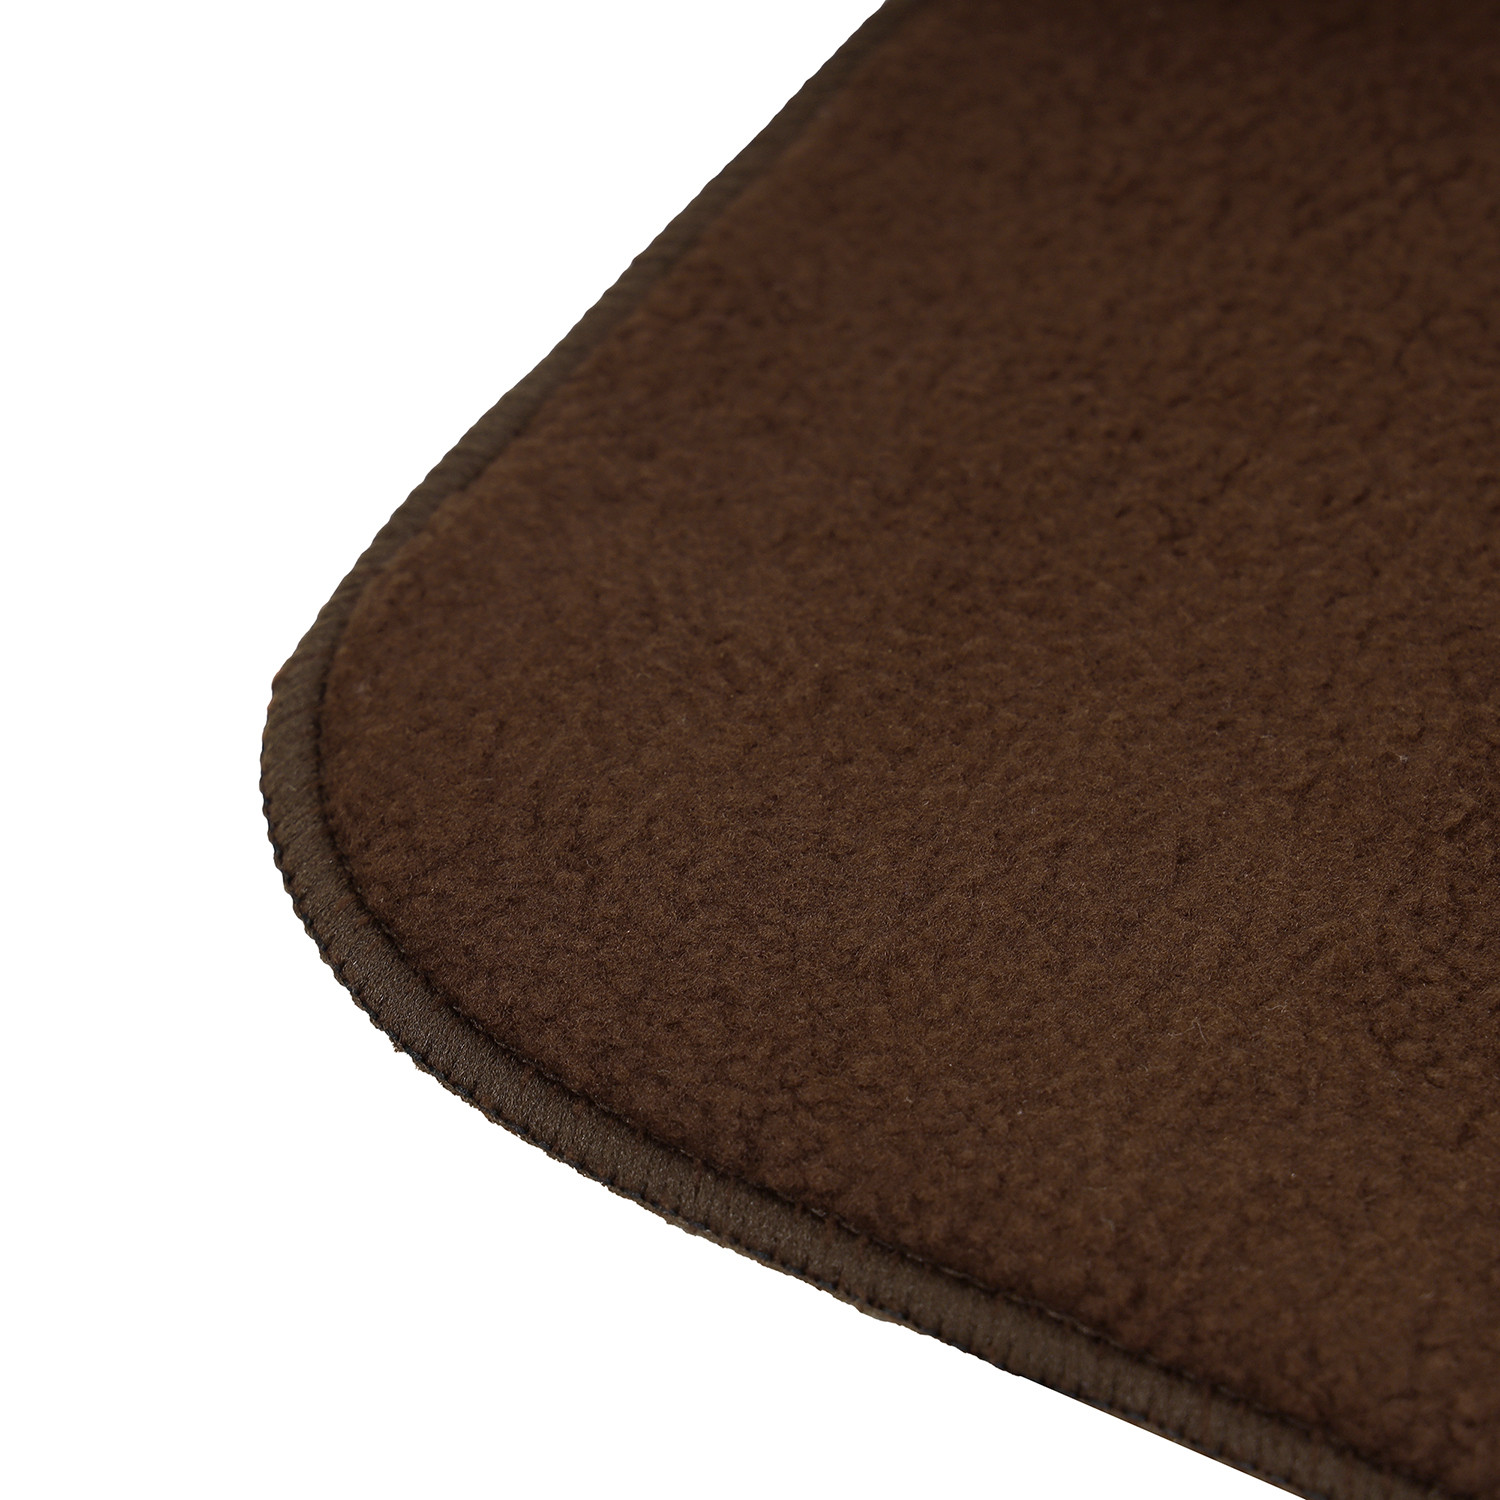 Kuber Industries Dish Dry Mat | Microfiber Drying Mat | Reversible Kitchen Drying Mat | Absorbent Mat | Kitchen Dish Dry Mat | 38x50 | Pack of 2 | Brown & Maroon